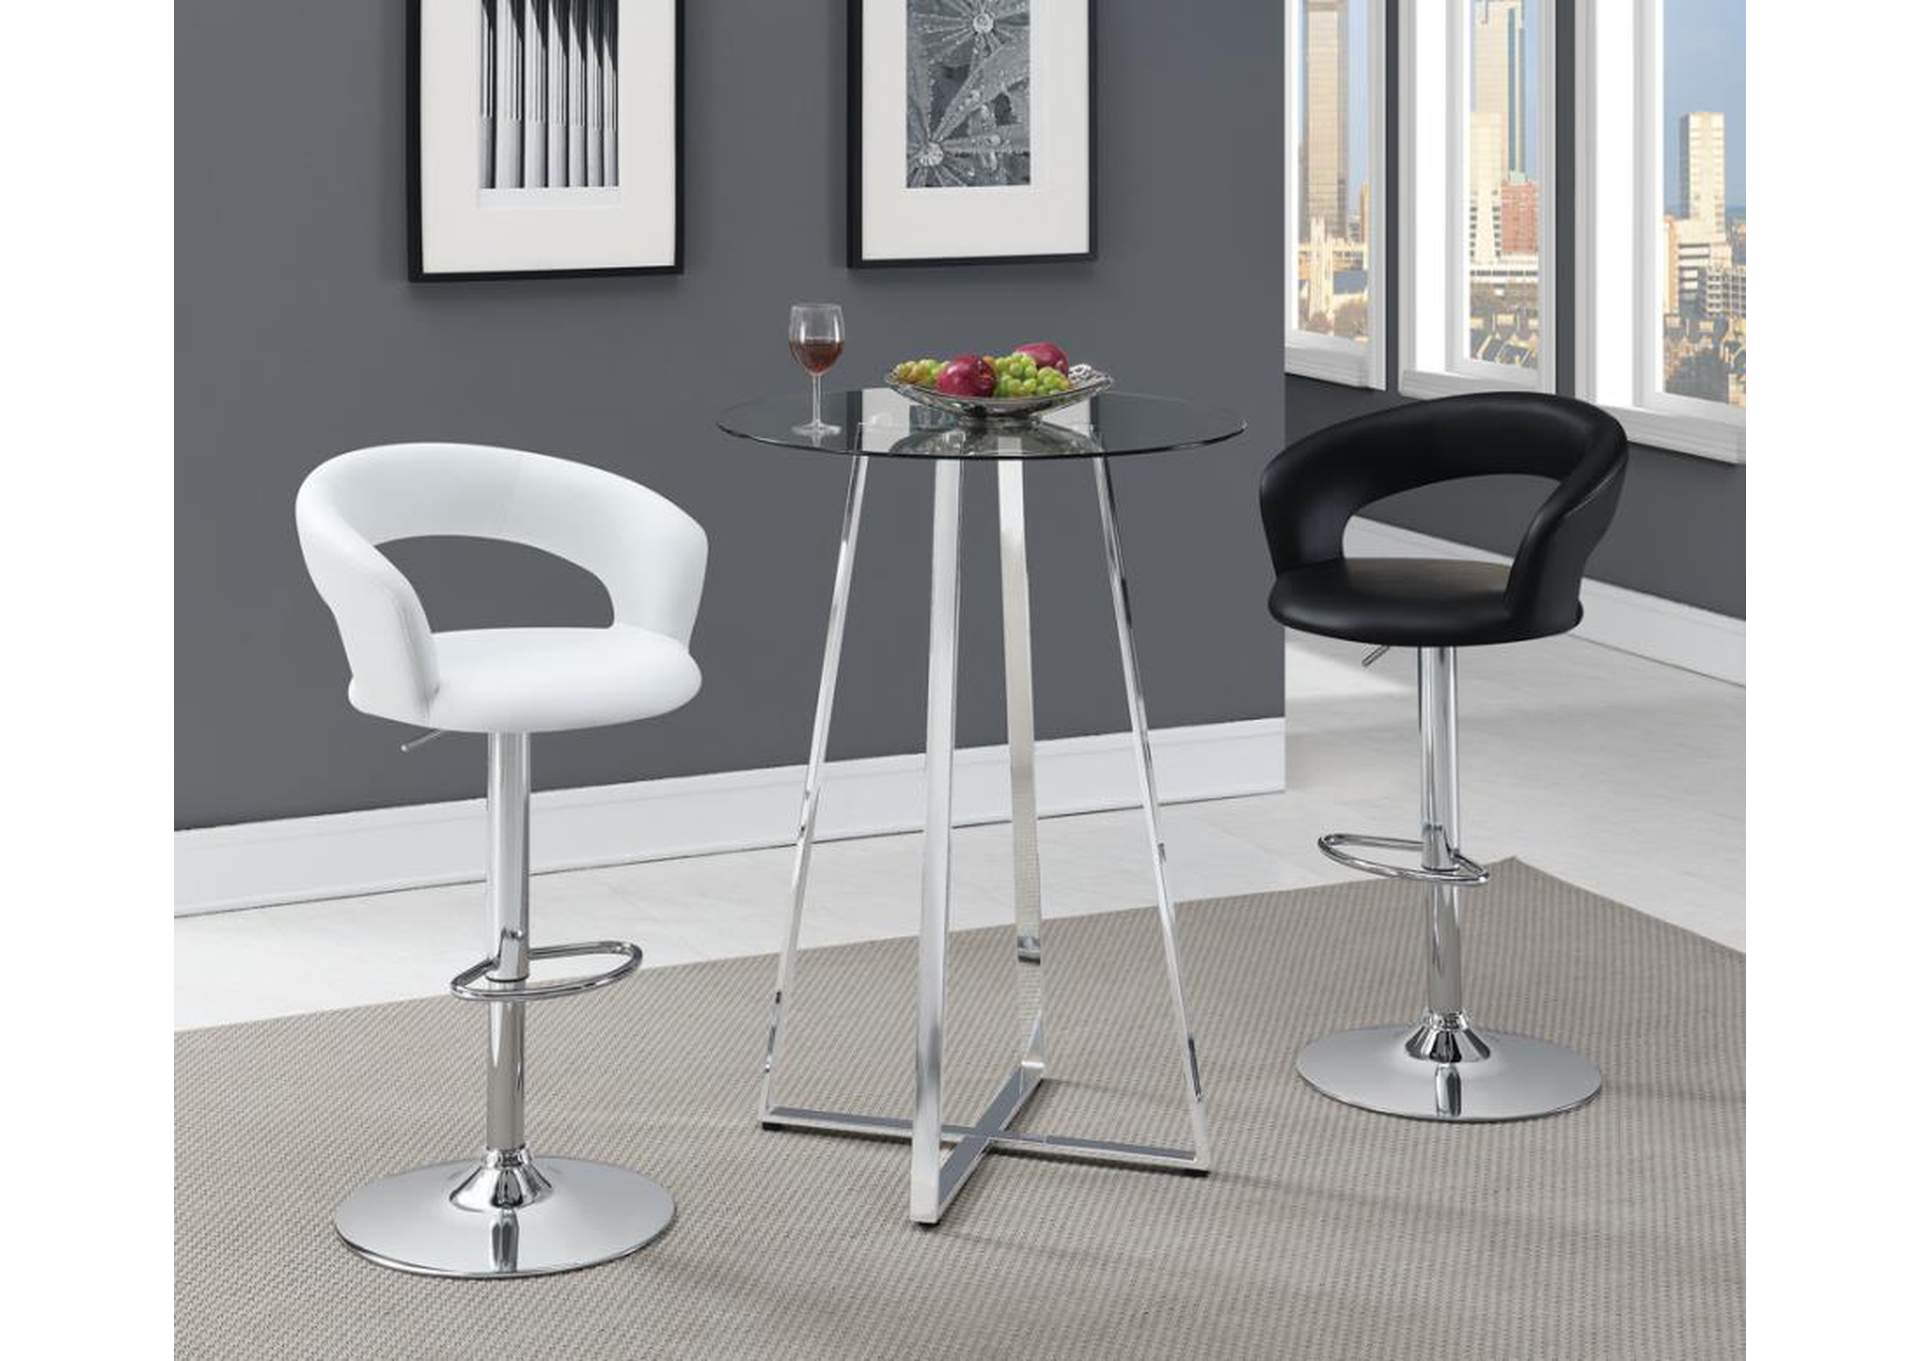 29" Adjustable Height Bar Stool Black And Chrome,Coaster Furniture